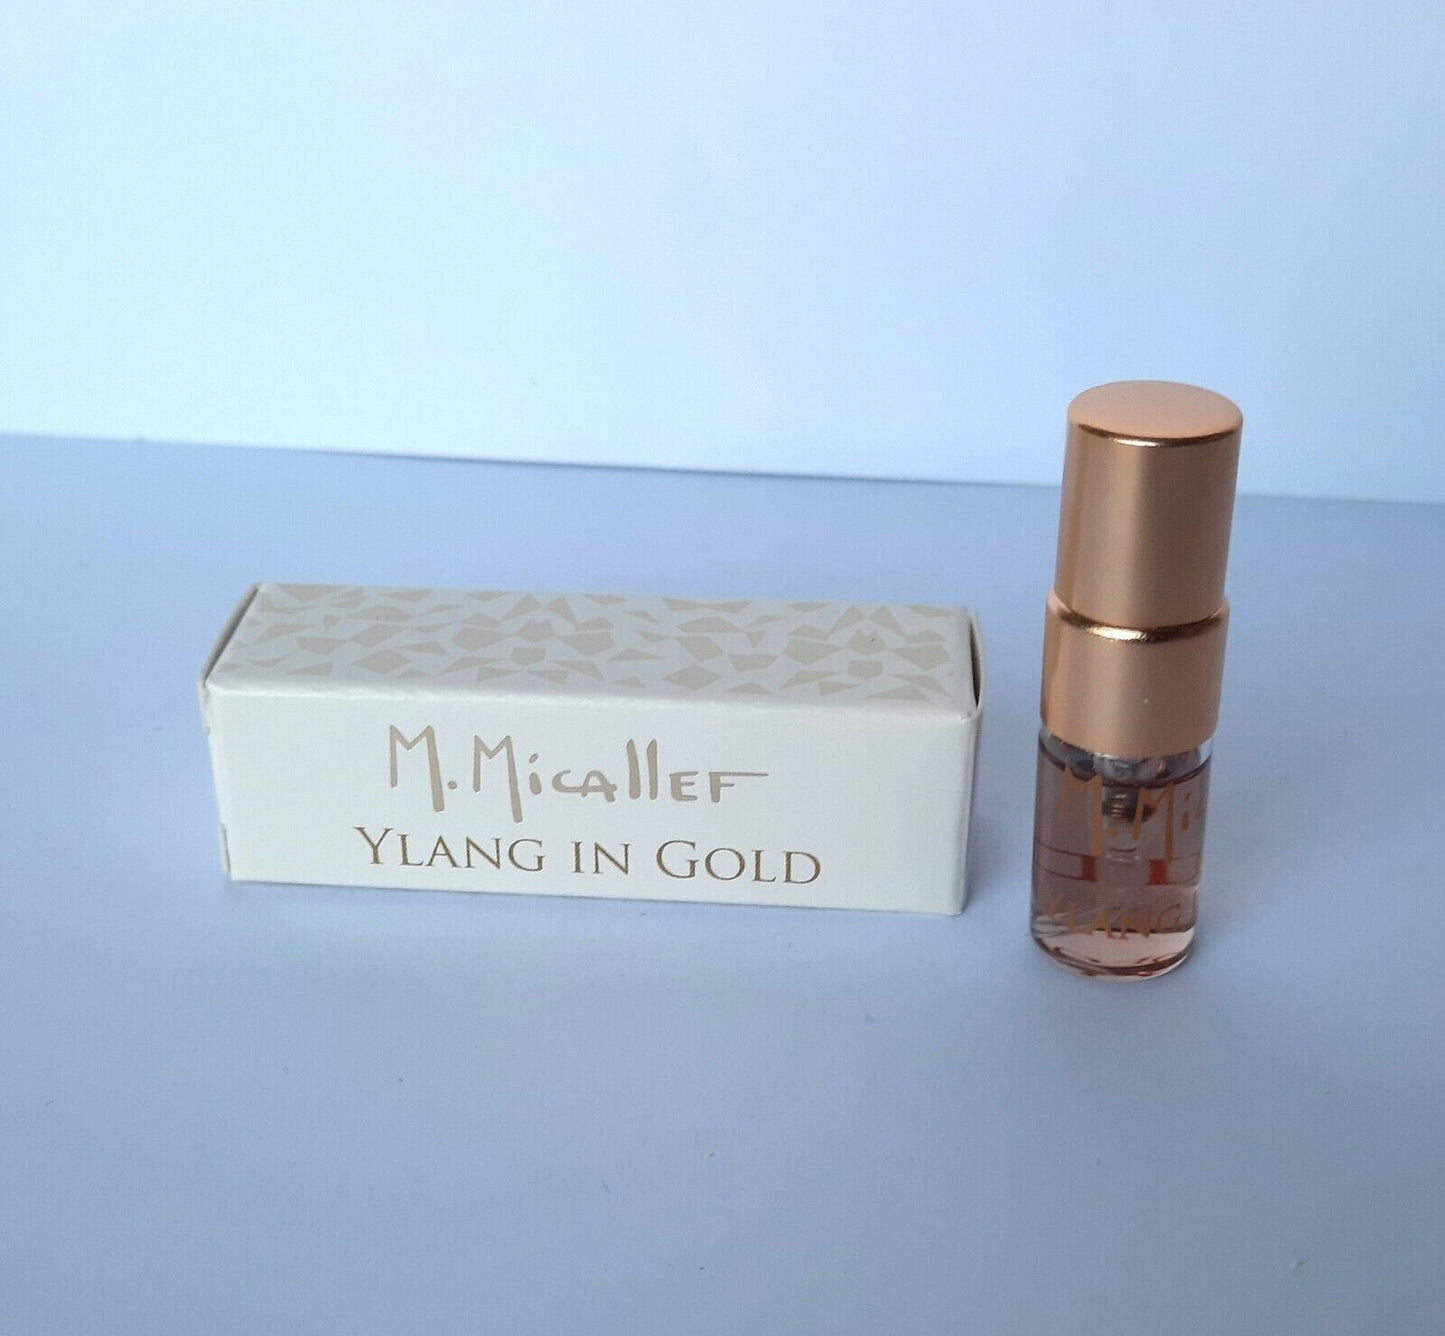 M. Micallef Ylang in Gold 2ml 0.06 Fl. Oz. hivatalos parfümminta